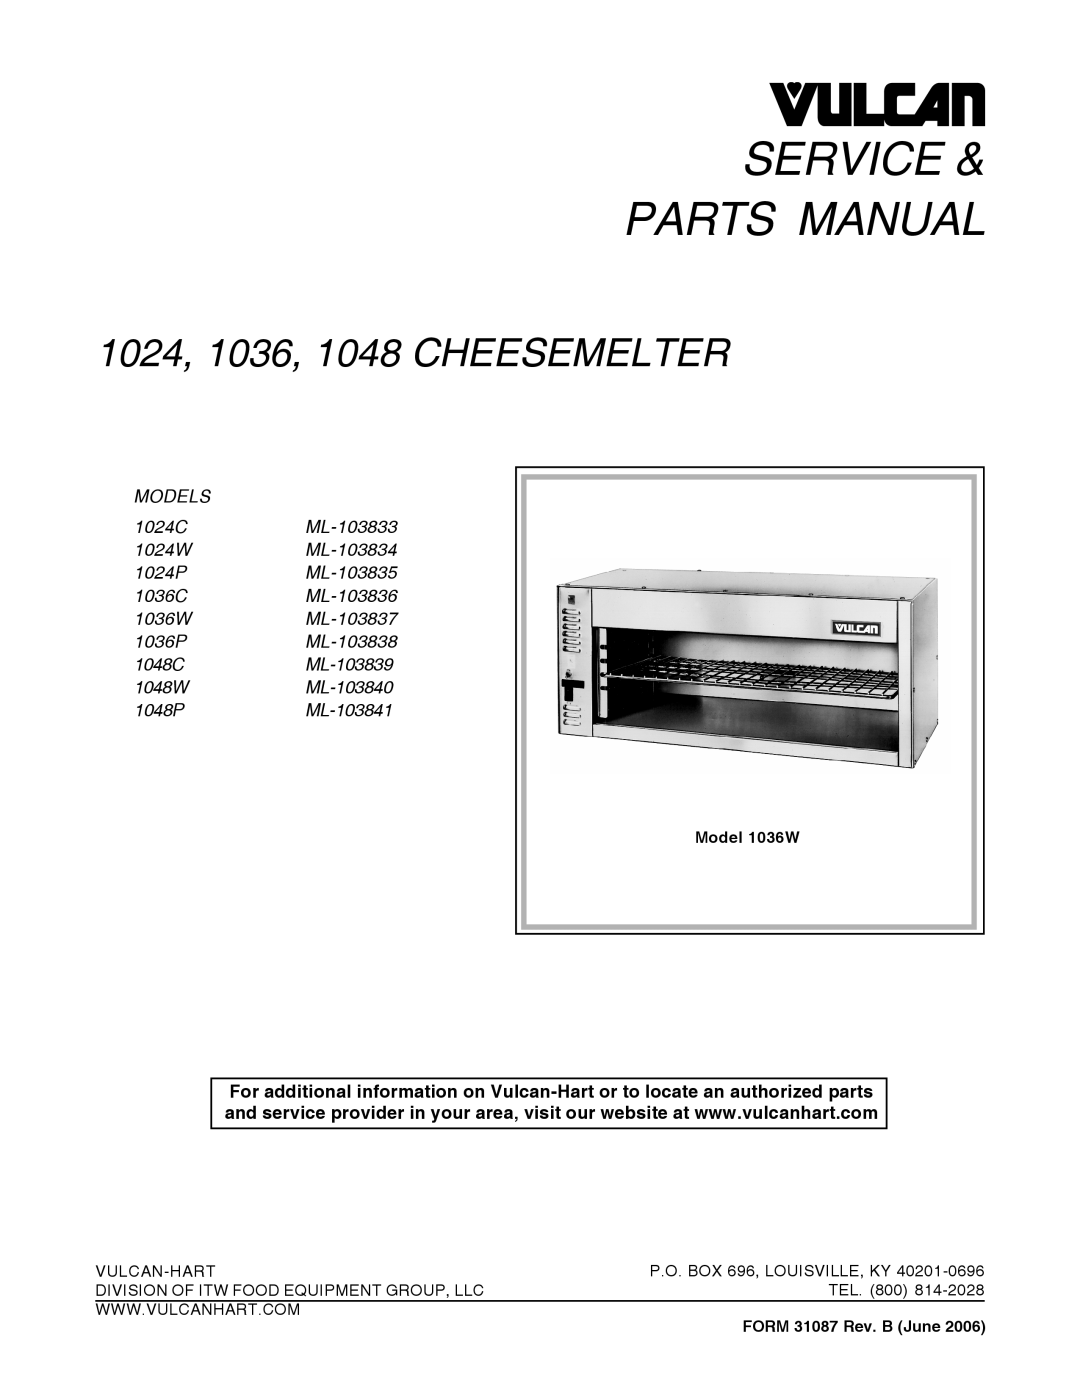 Vulcan-Hart 1036W ML-103837, 1048W ML-103840, 1036C ML-103836 manual Service Parts Manual, 1024, 1036, 1048 CHEESEMELTER 